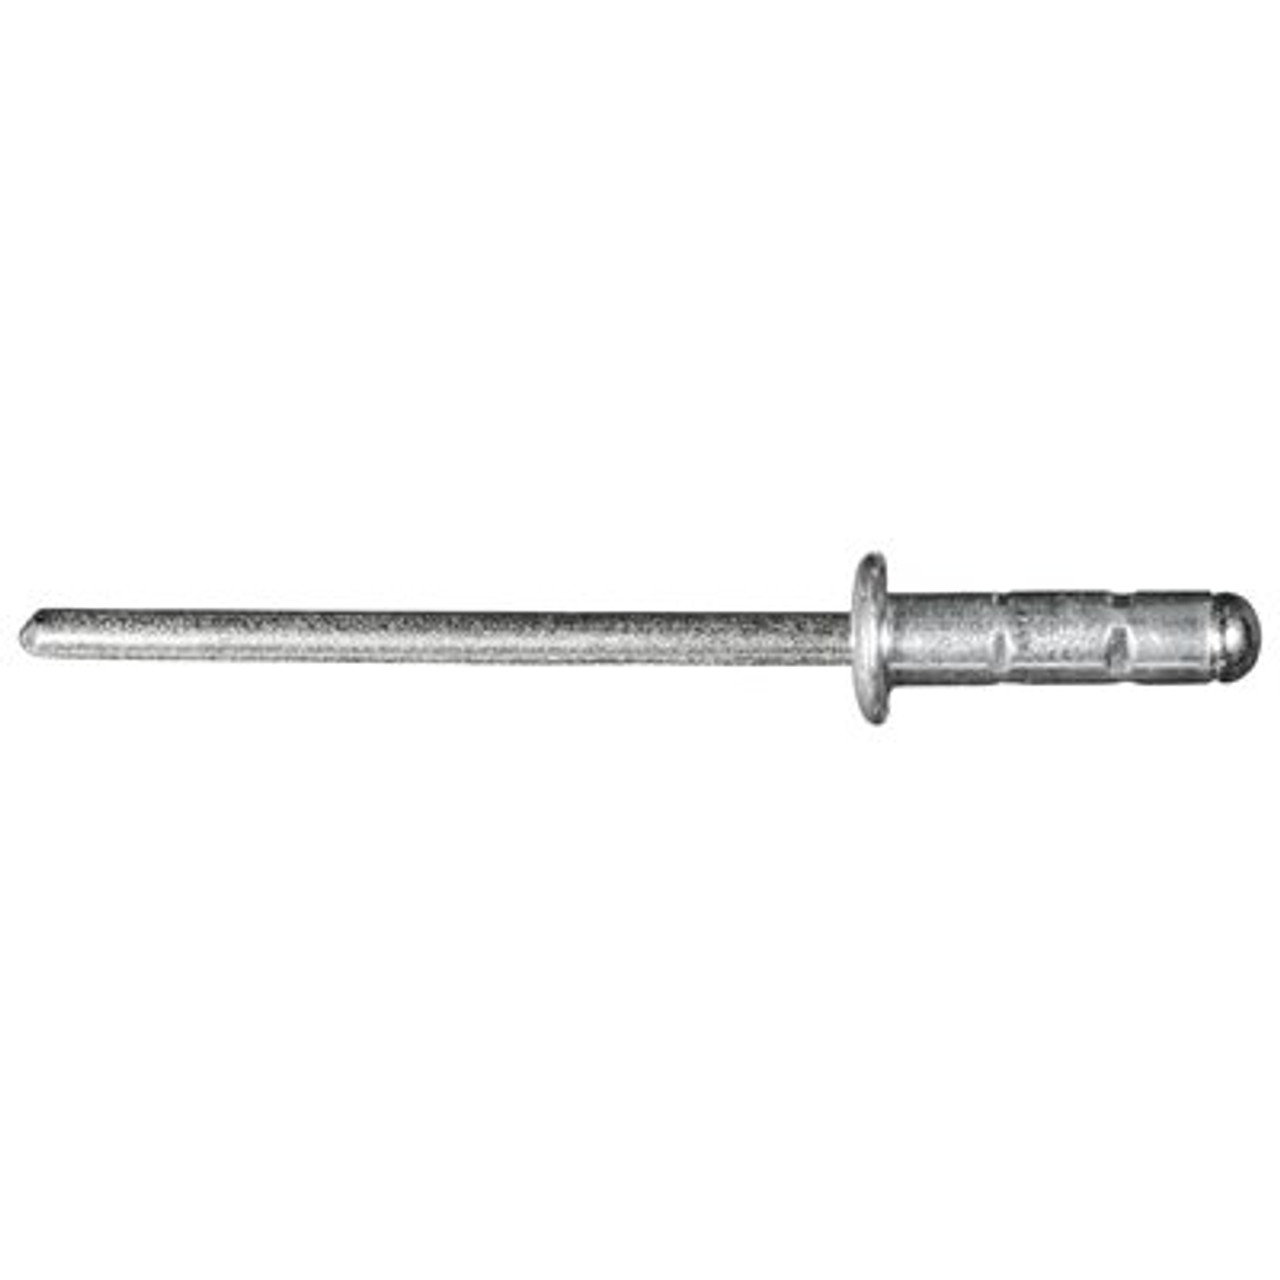 Rivet Diameter : 5/32"
Grip Range : 11/64" - 11/32"
Flange Diameter : 9/32"
Material : Aluminum Rivet, Steel Mandrel
Pcs/Unit: 25
Country: US
Catalog Page #: 351